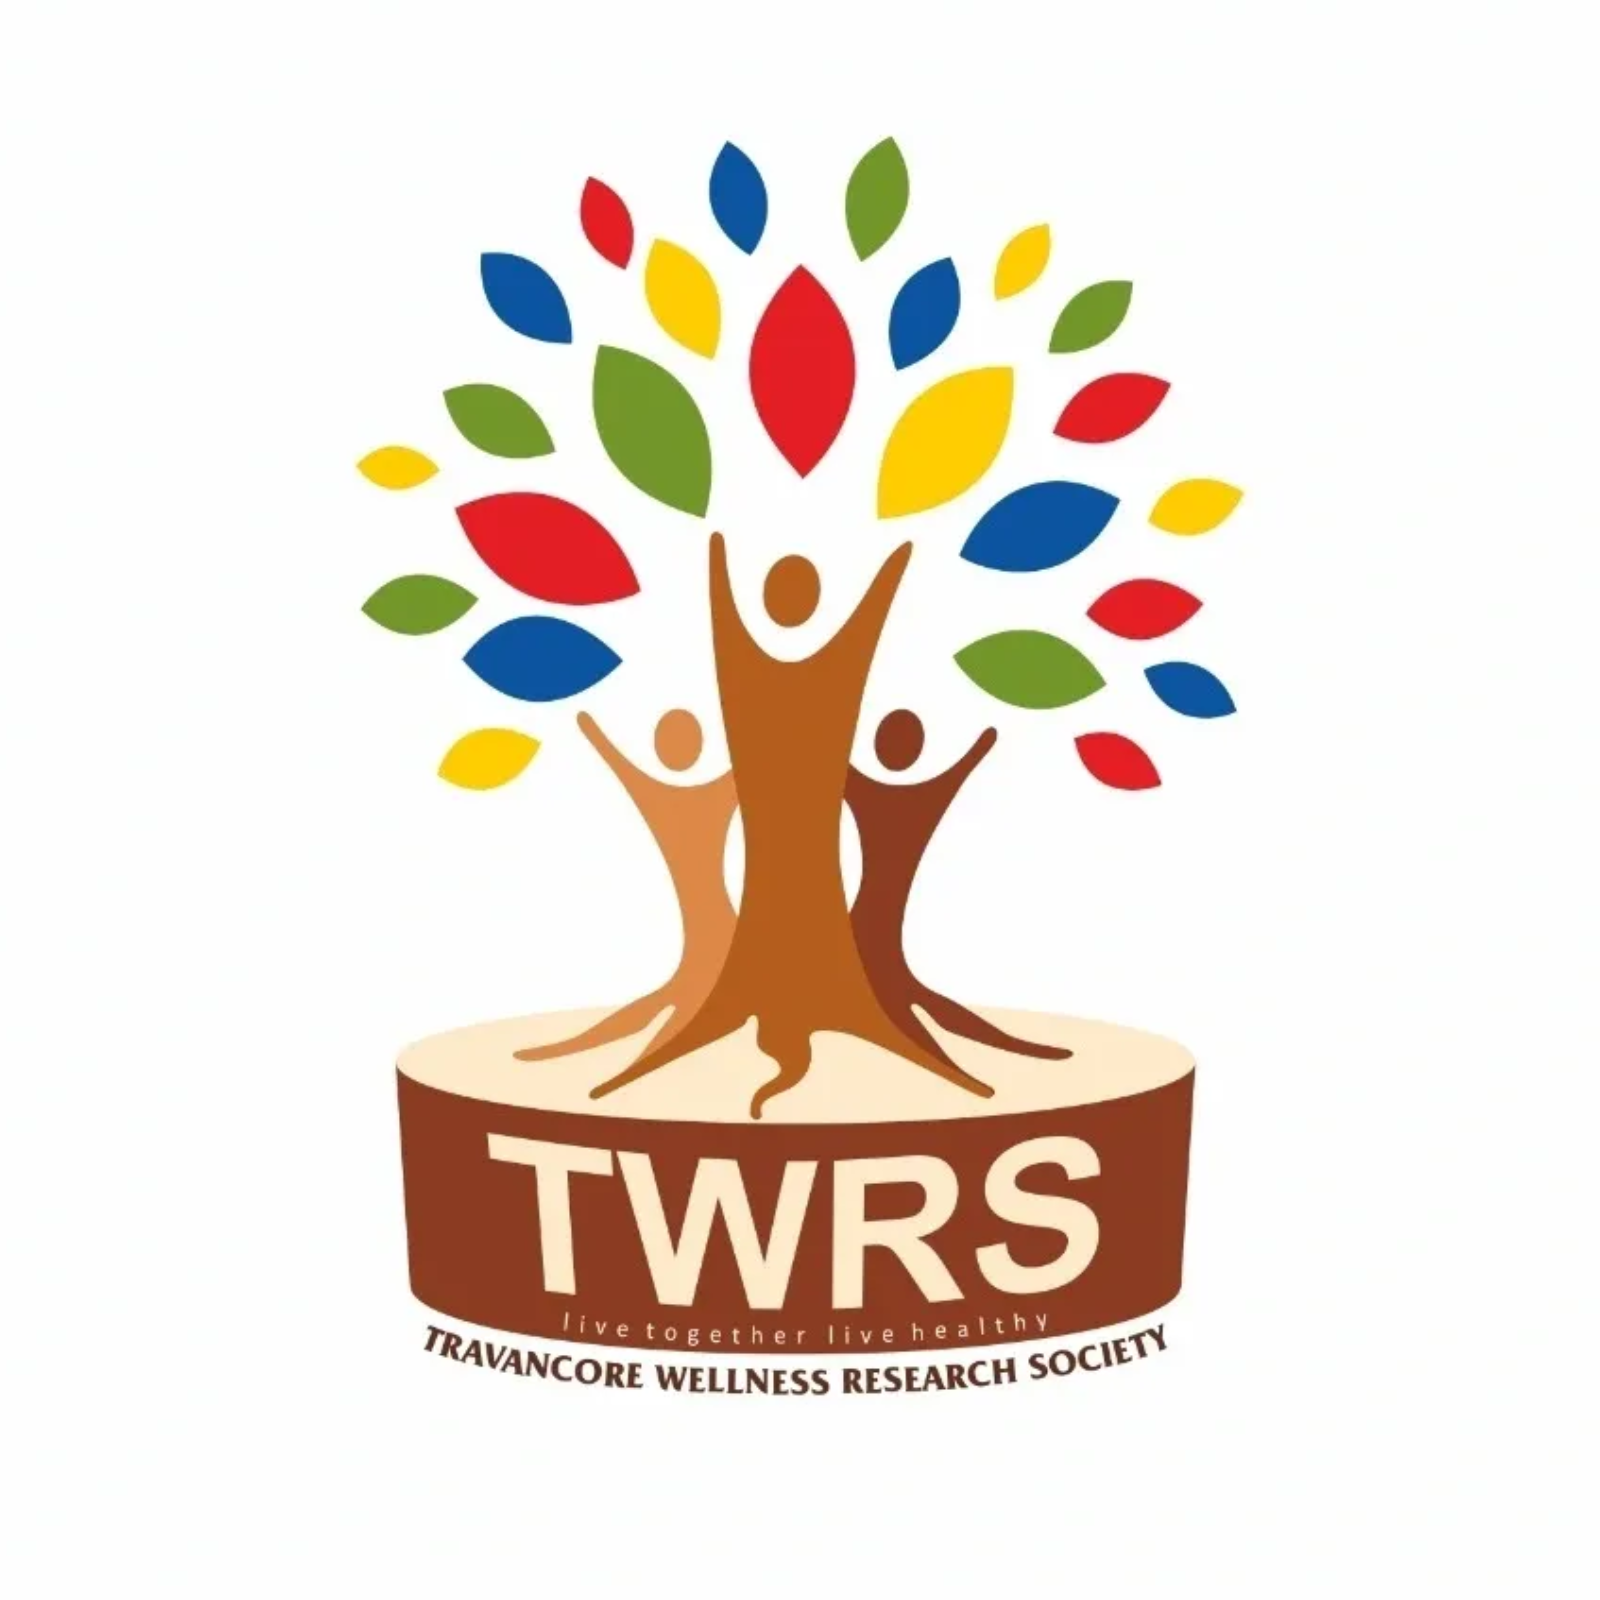 Travancore Wellness Research Society